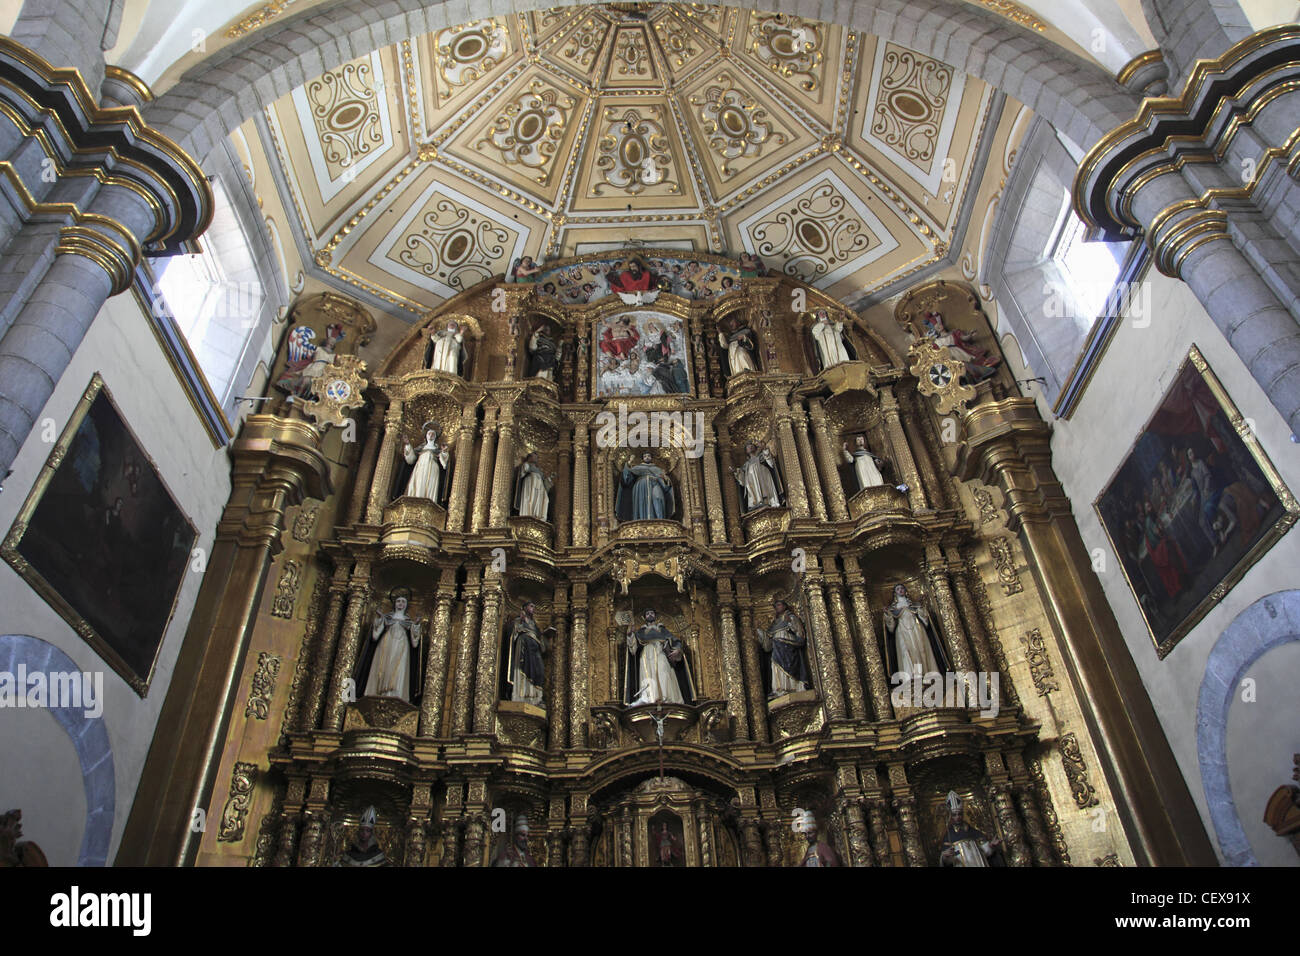 Iglesia de santo domingo puebla hi-res stock photography and images - Alamy